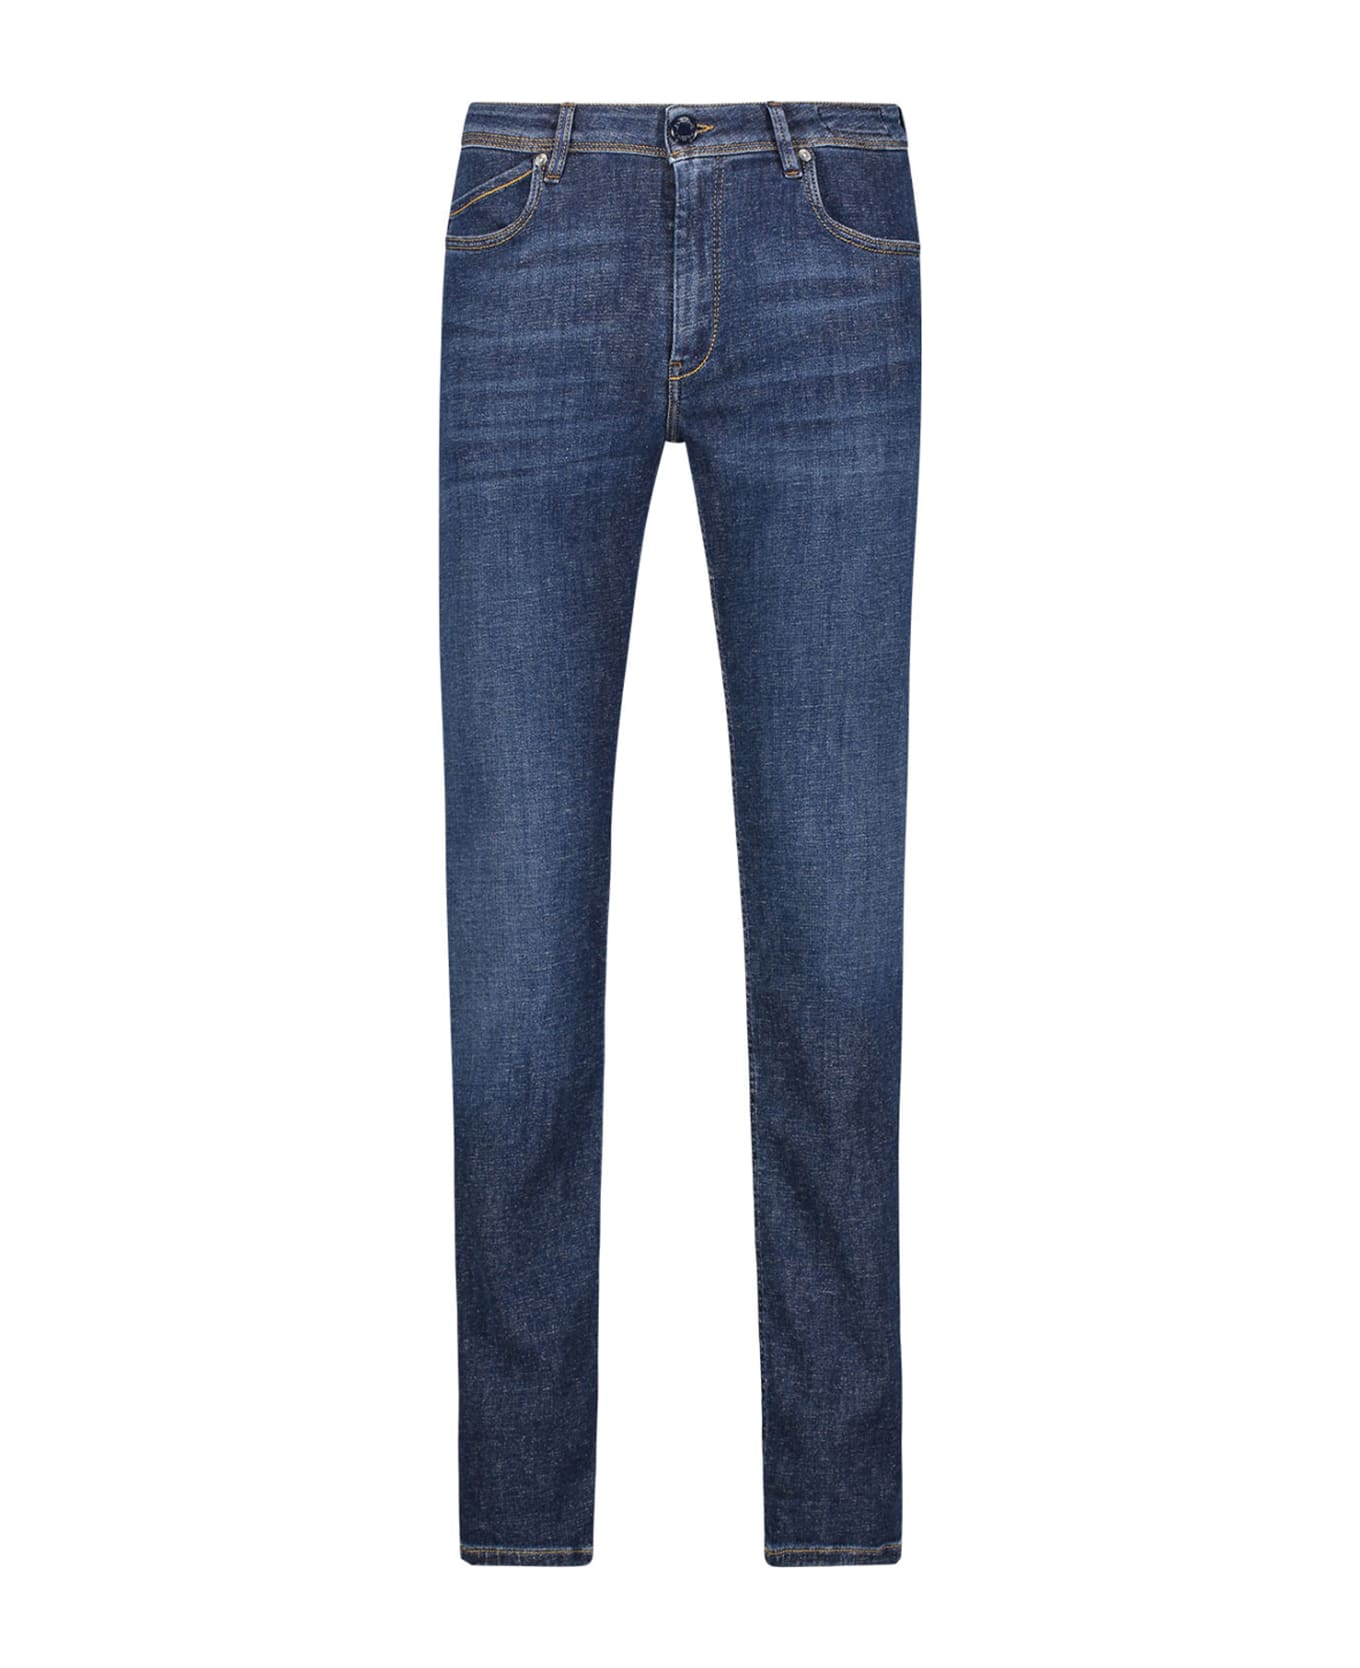 Re-HasH Slim Fit Jeans In Dark Denim - DENIM SCURO